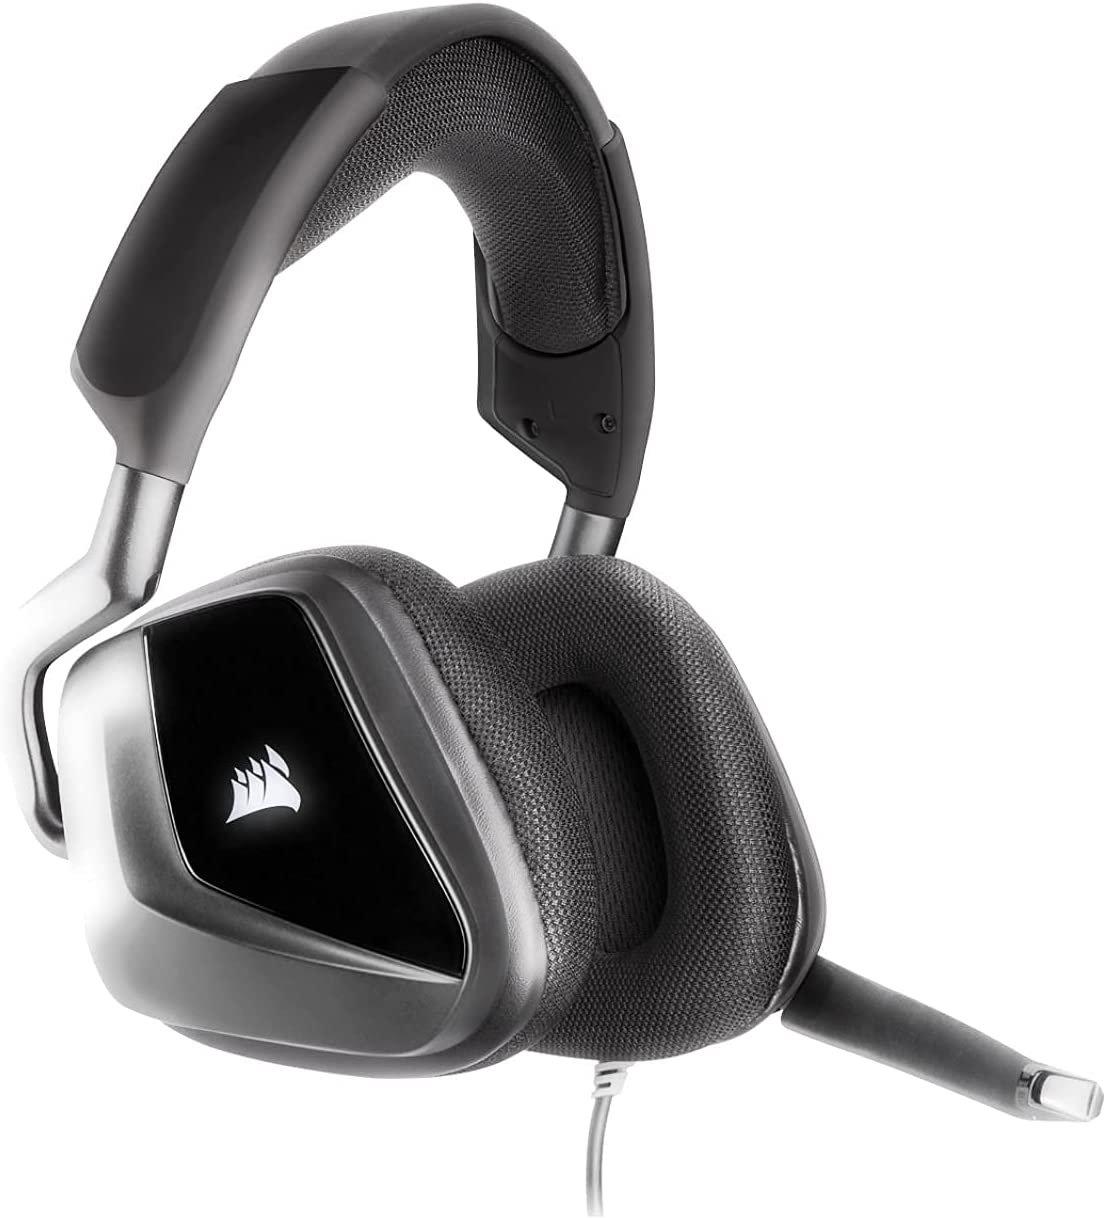 Corsair VOID ELITE SURROUND 3.5mm/ USB Connector Circumaural Premium Gaming Headset with 7.1 Surround Sound, Carbon